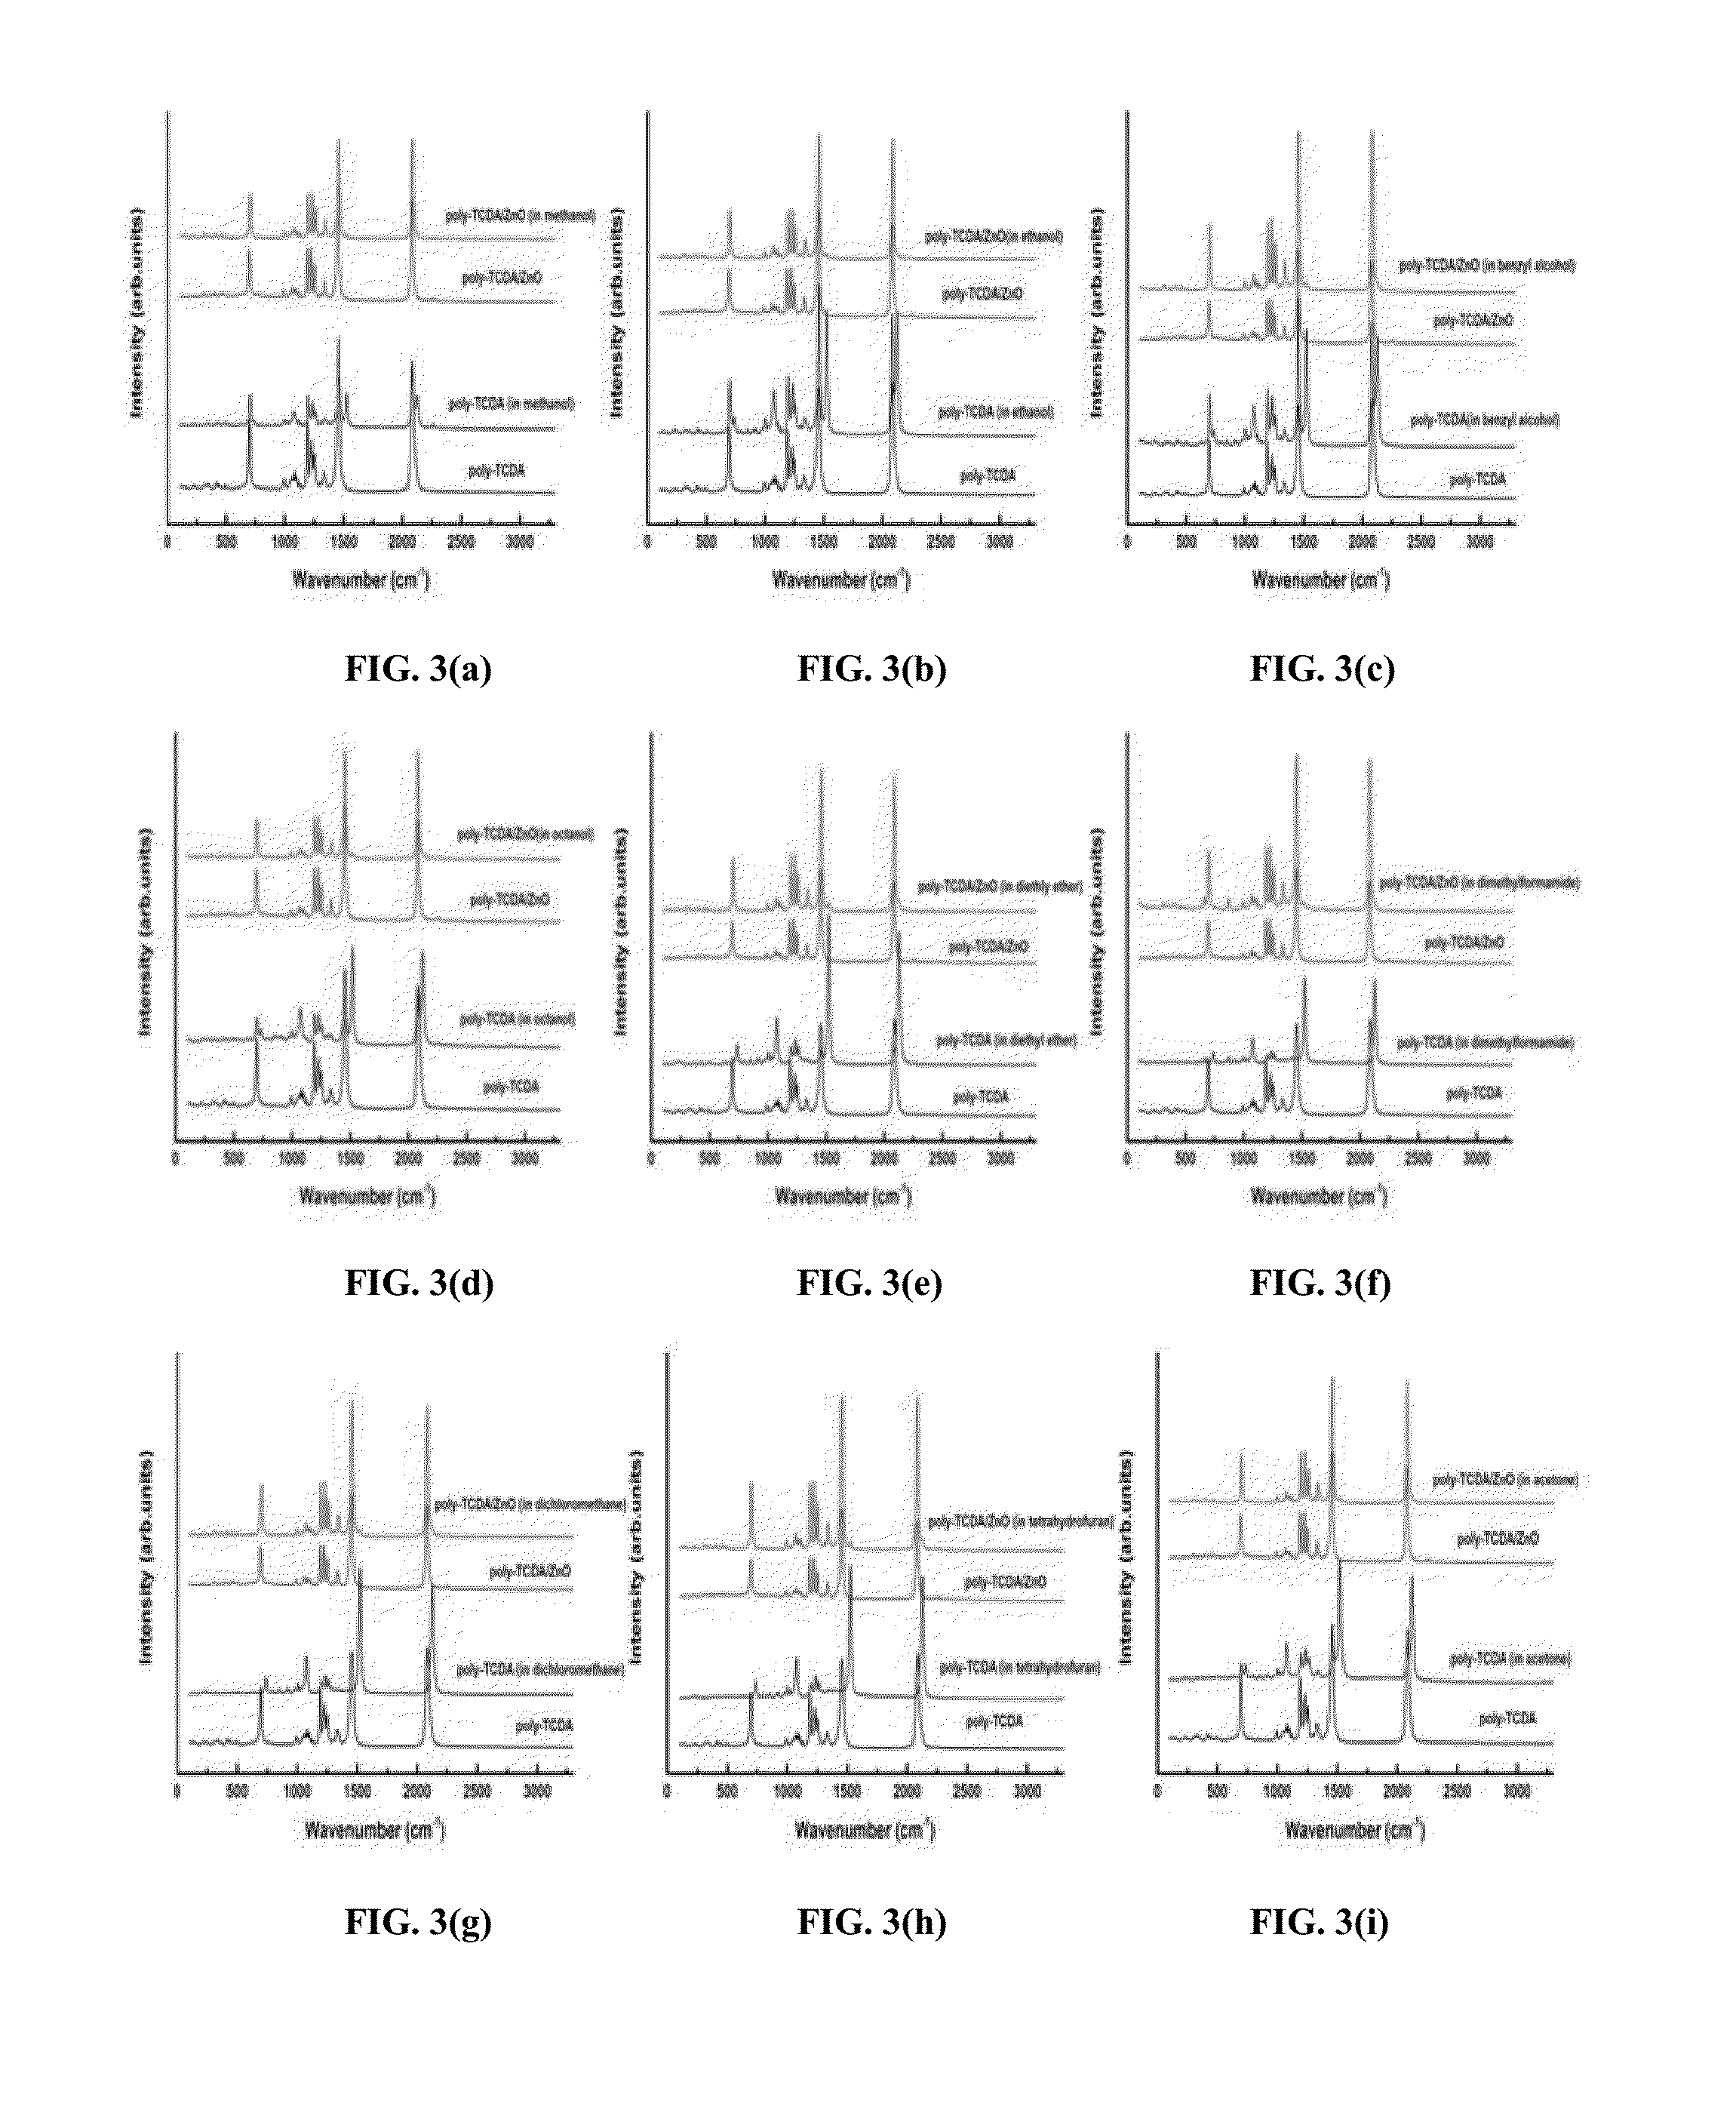 Polydiacetylene and polydiacetylene/zno nanocomposite sensors